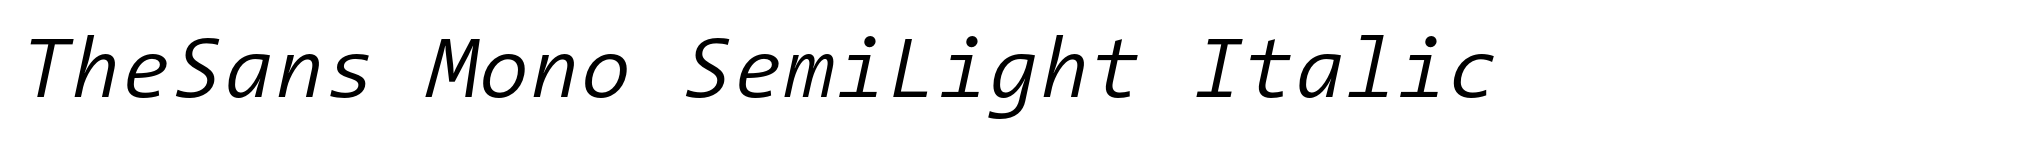 TheSans Mono SemiLight Italic image